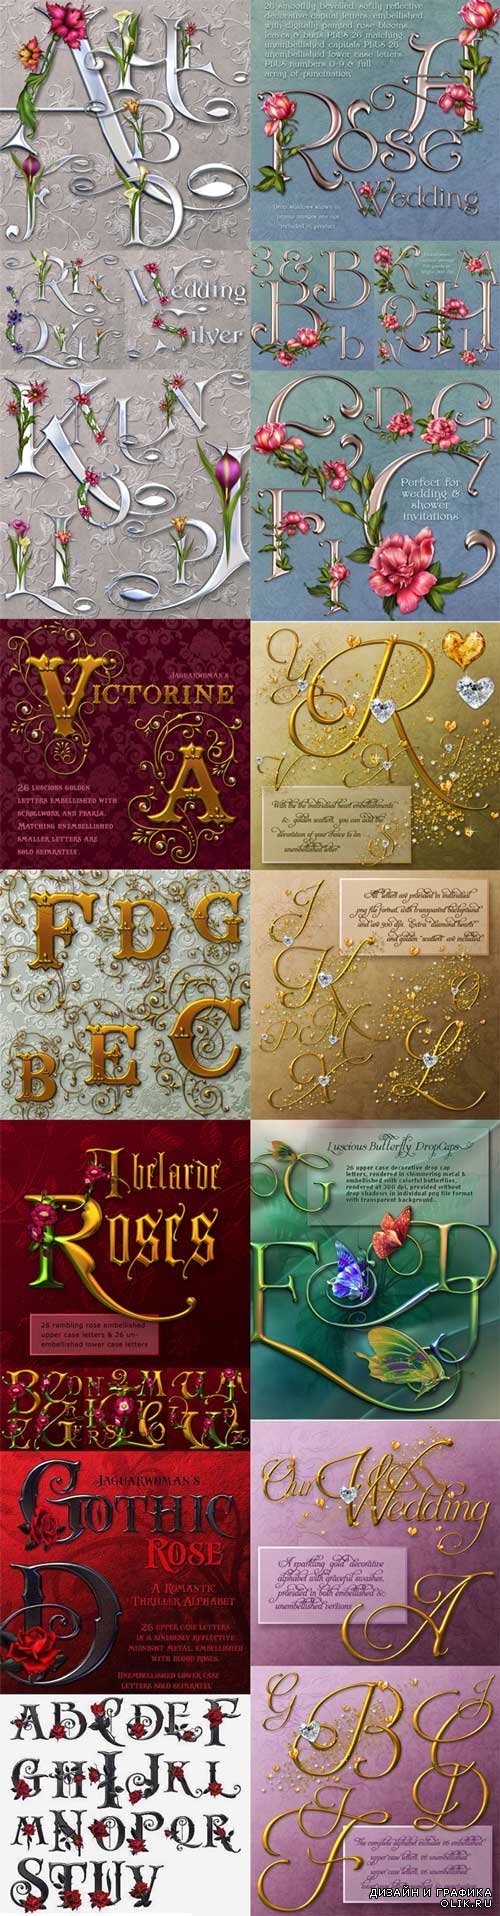 Extraordinarily beautiful alphabets